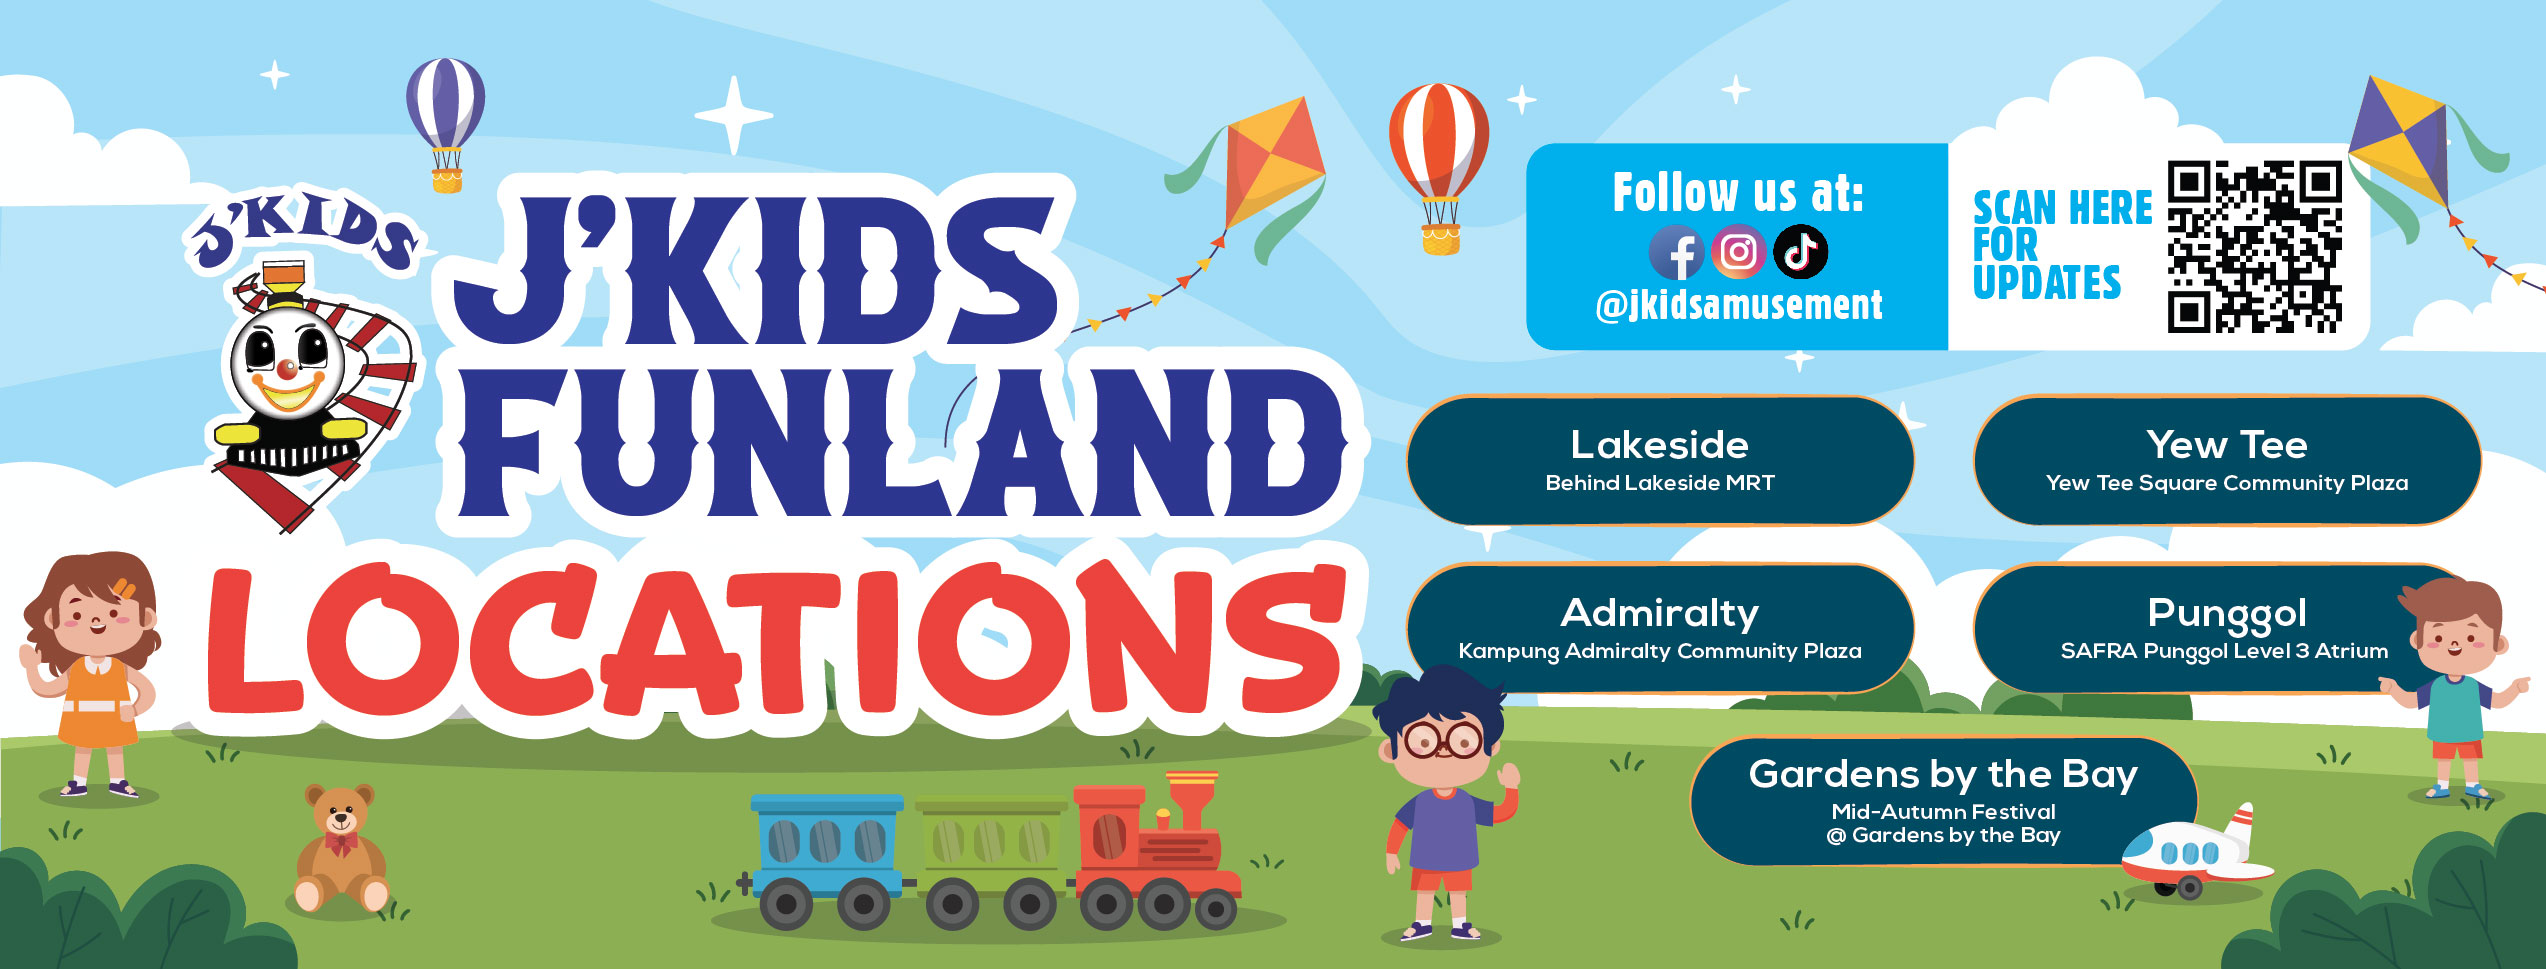 J'Kids Funland Locations Updates__Banner